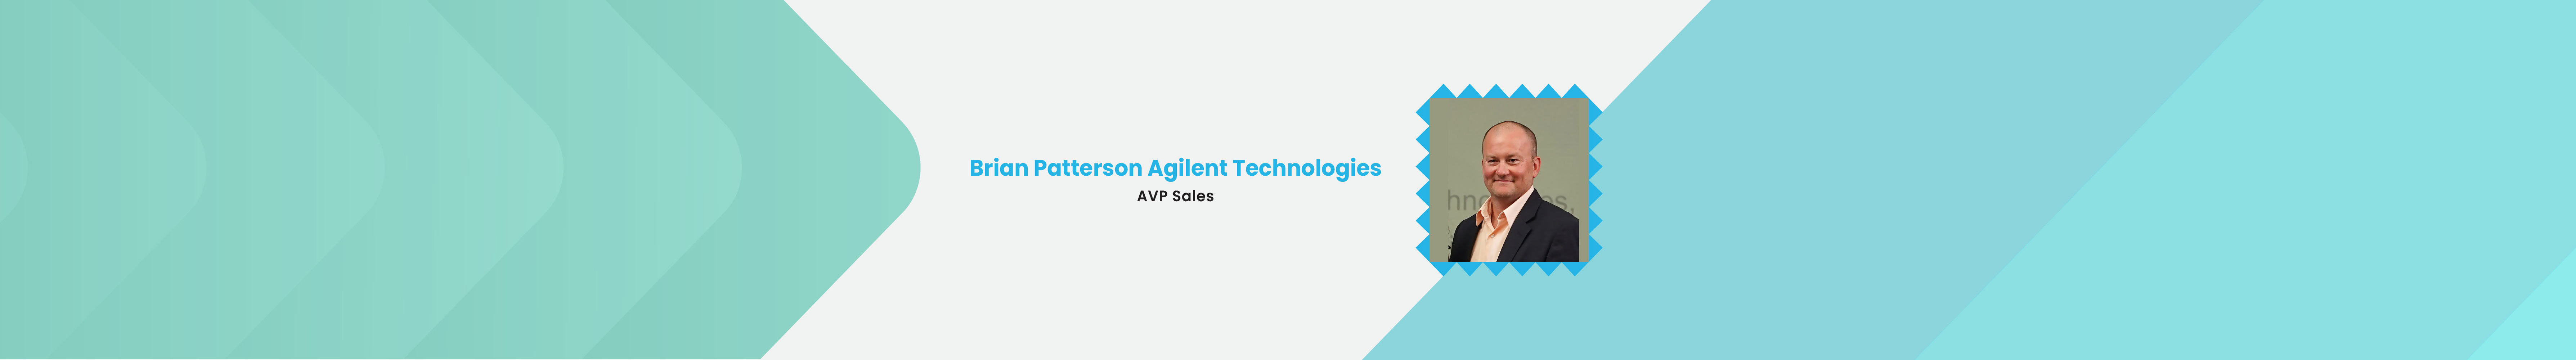 Brian Patterson Agilent Technologies's profile banner